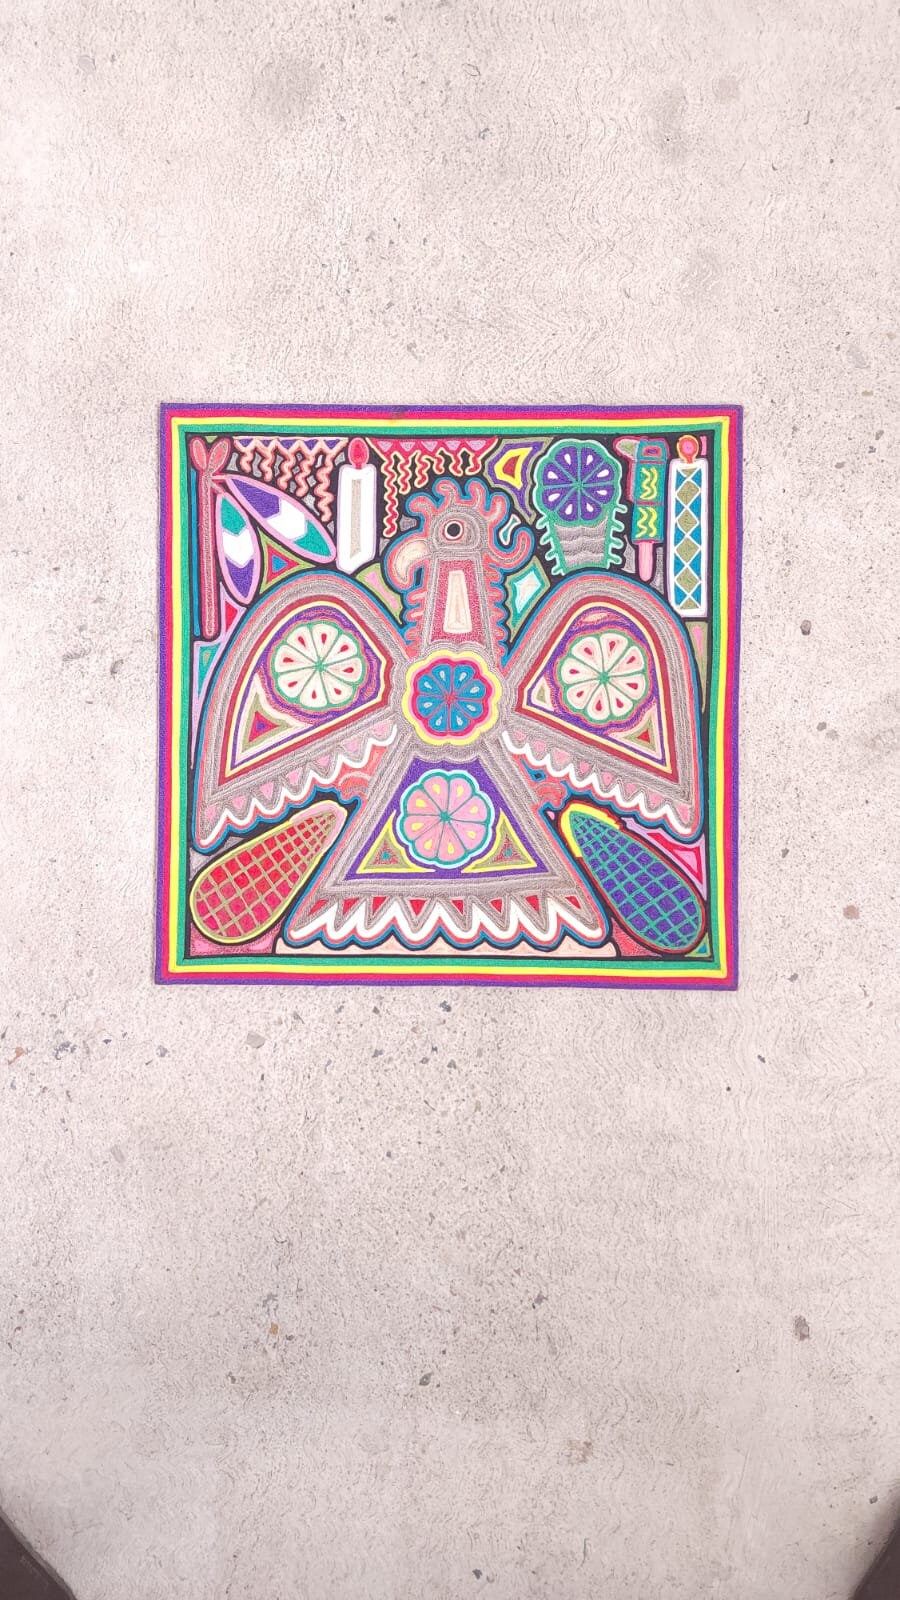 Eagle Spirit Huichol Indian Mexican Folk Art Yarn Painting by Jesus Jimenez mxG PP6317